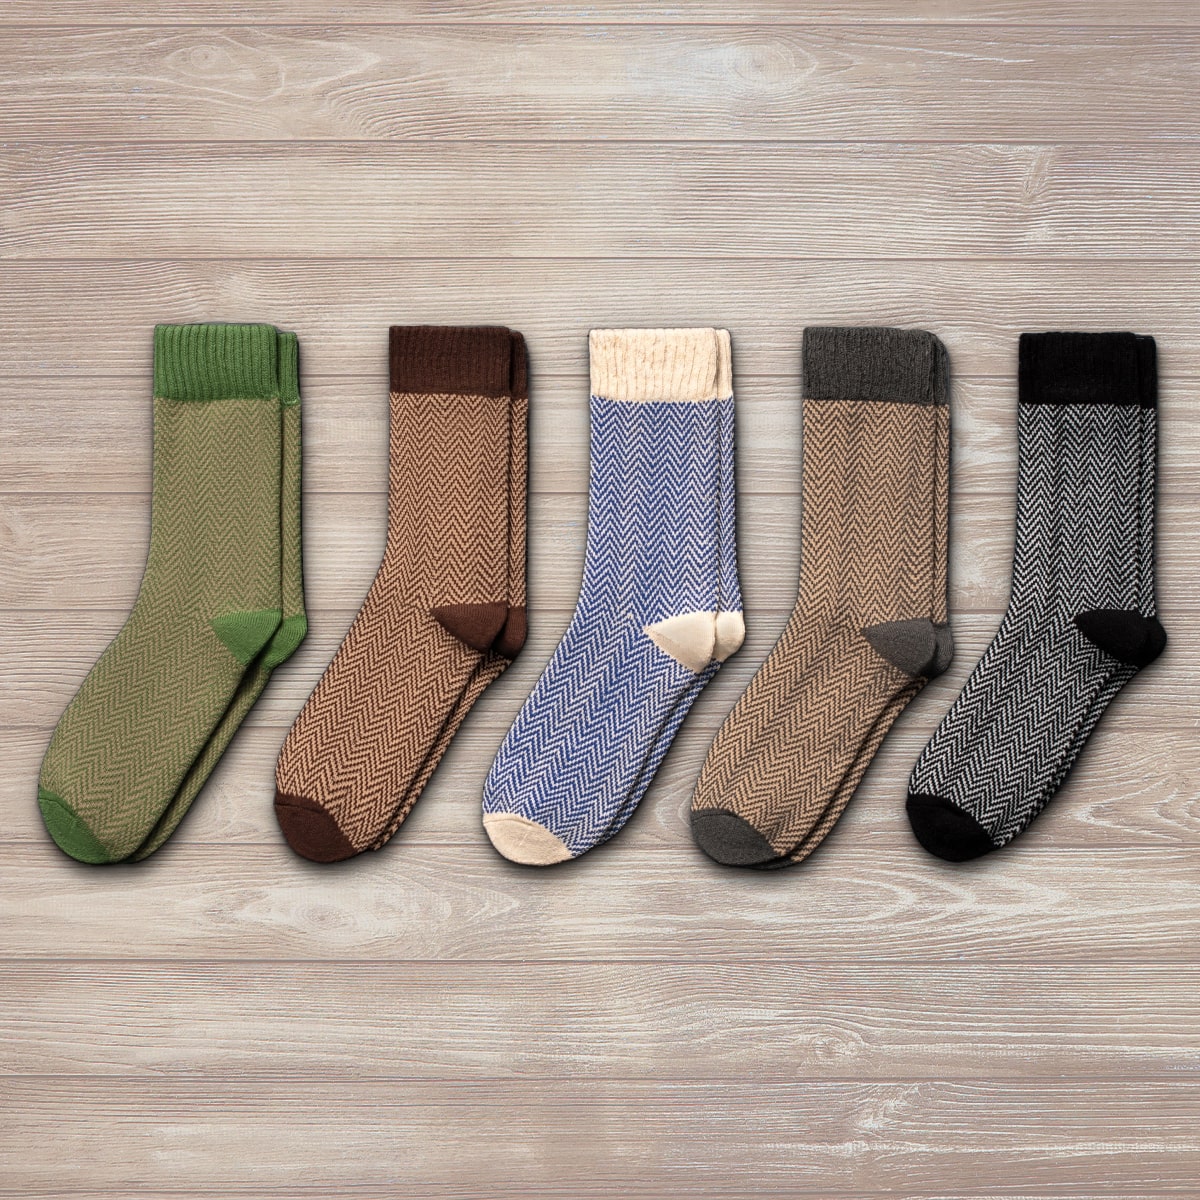 Nordic Socks – Nordics! like the Pamper feet your